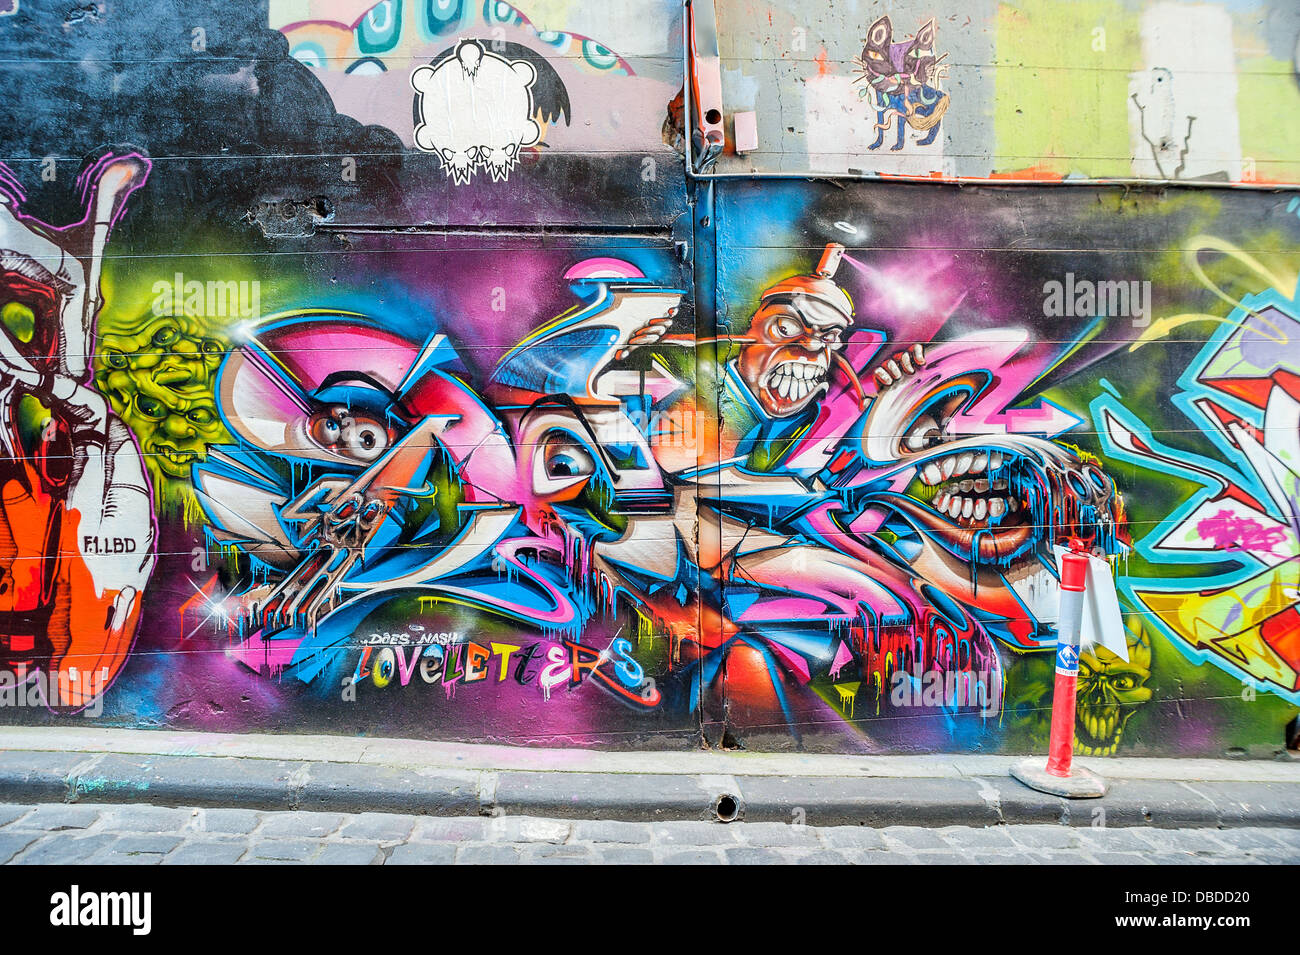 Melbourne's Hosier Lane is a celebrated landmark where legal street art decorates the walls. Stock Photo